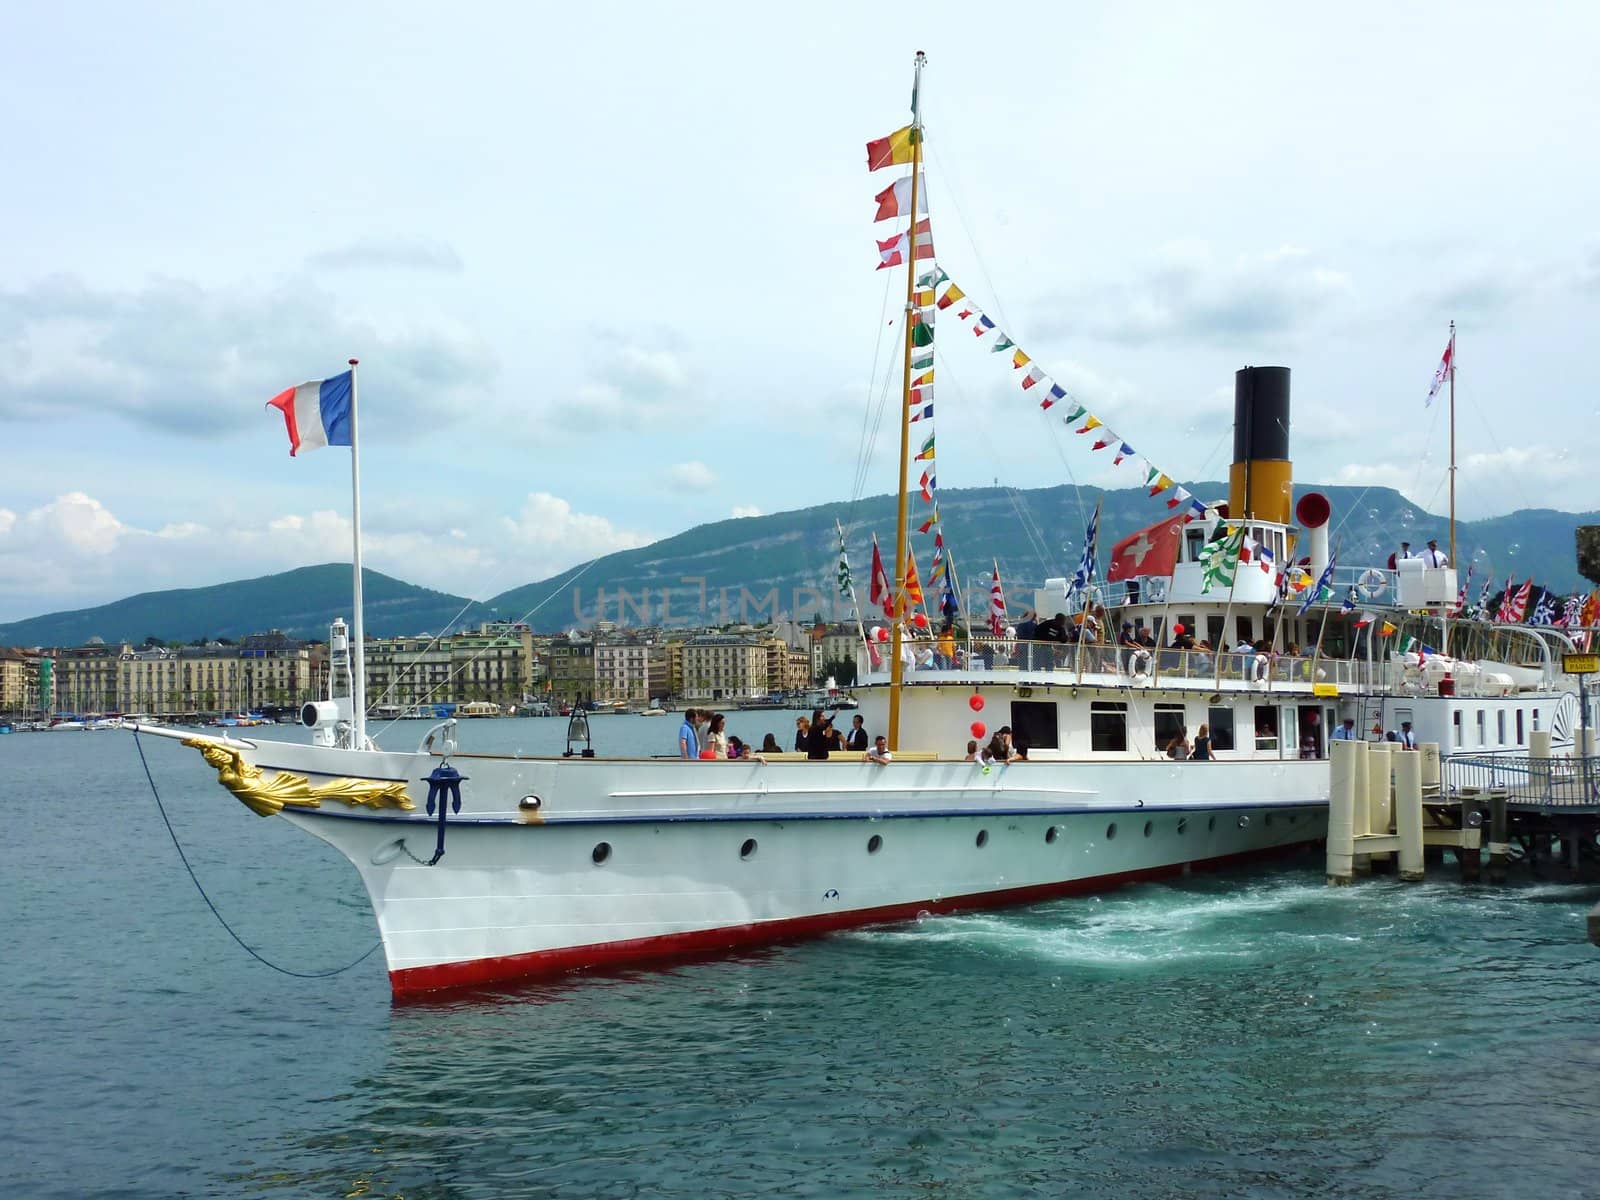 100 years celebration of "La Suisse" prestigious old wheelboat, by Elenaphotos21